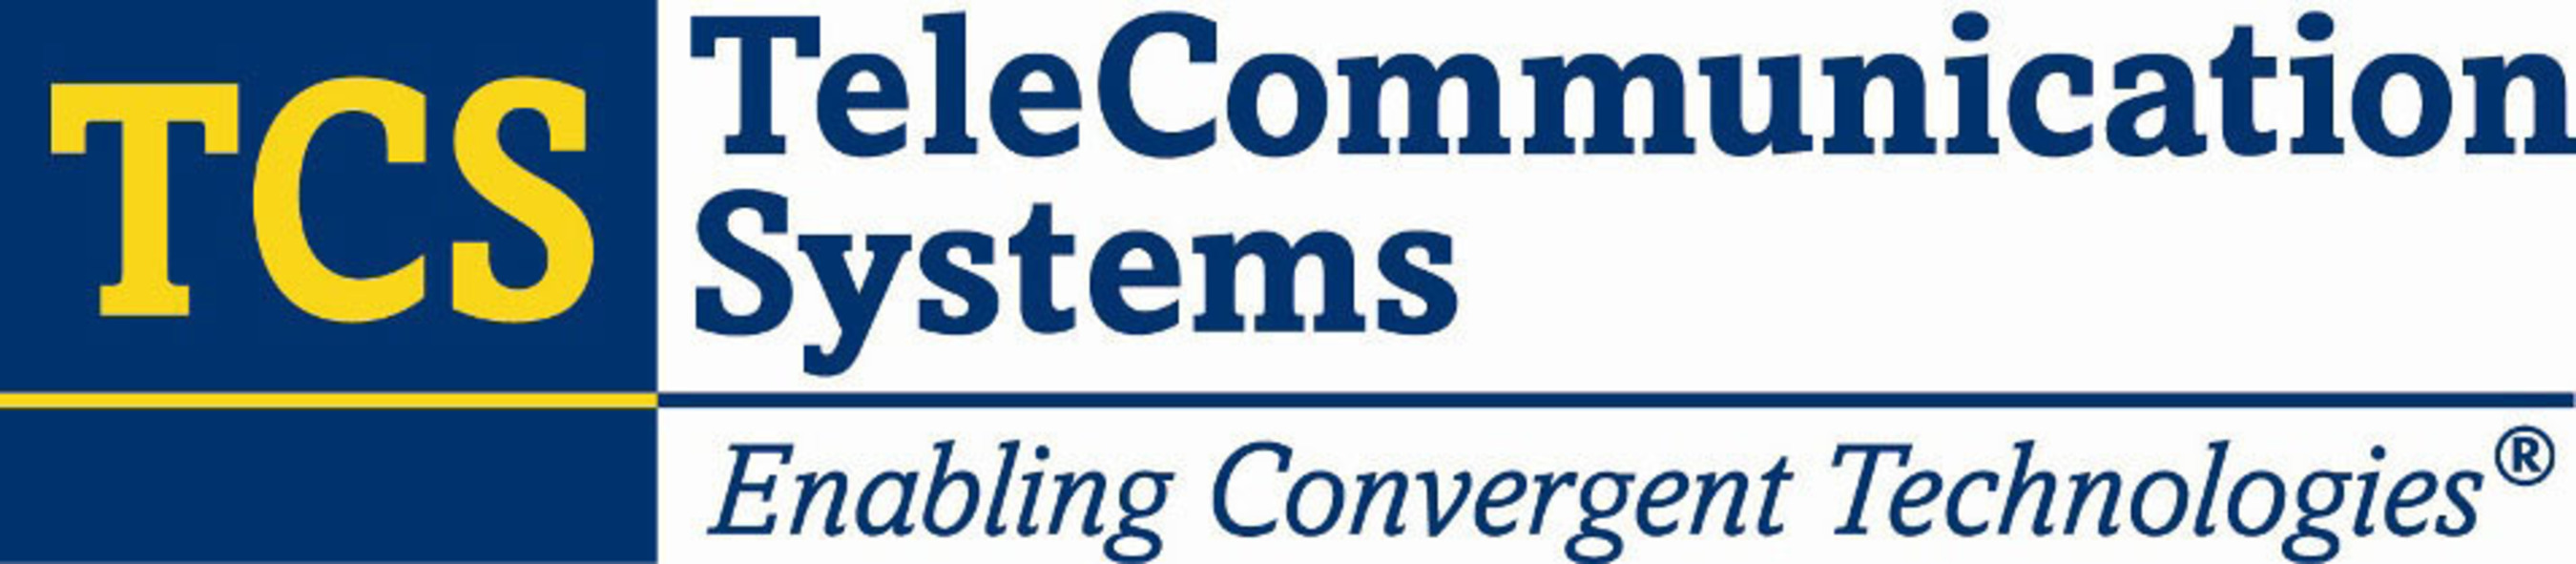 TeleCommunication Systems, Inc. Logo. (PRNewsFoto/TeleCommunication Systems, Inc.) (PRNewsFoto/)